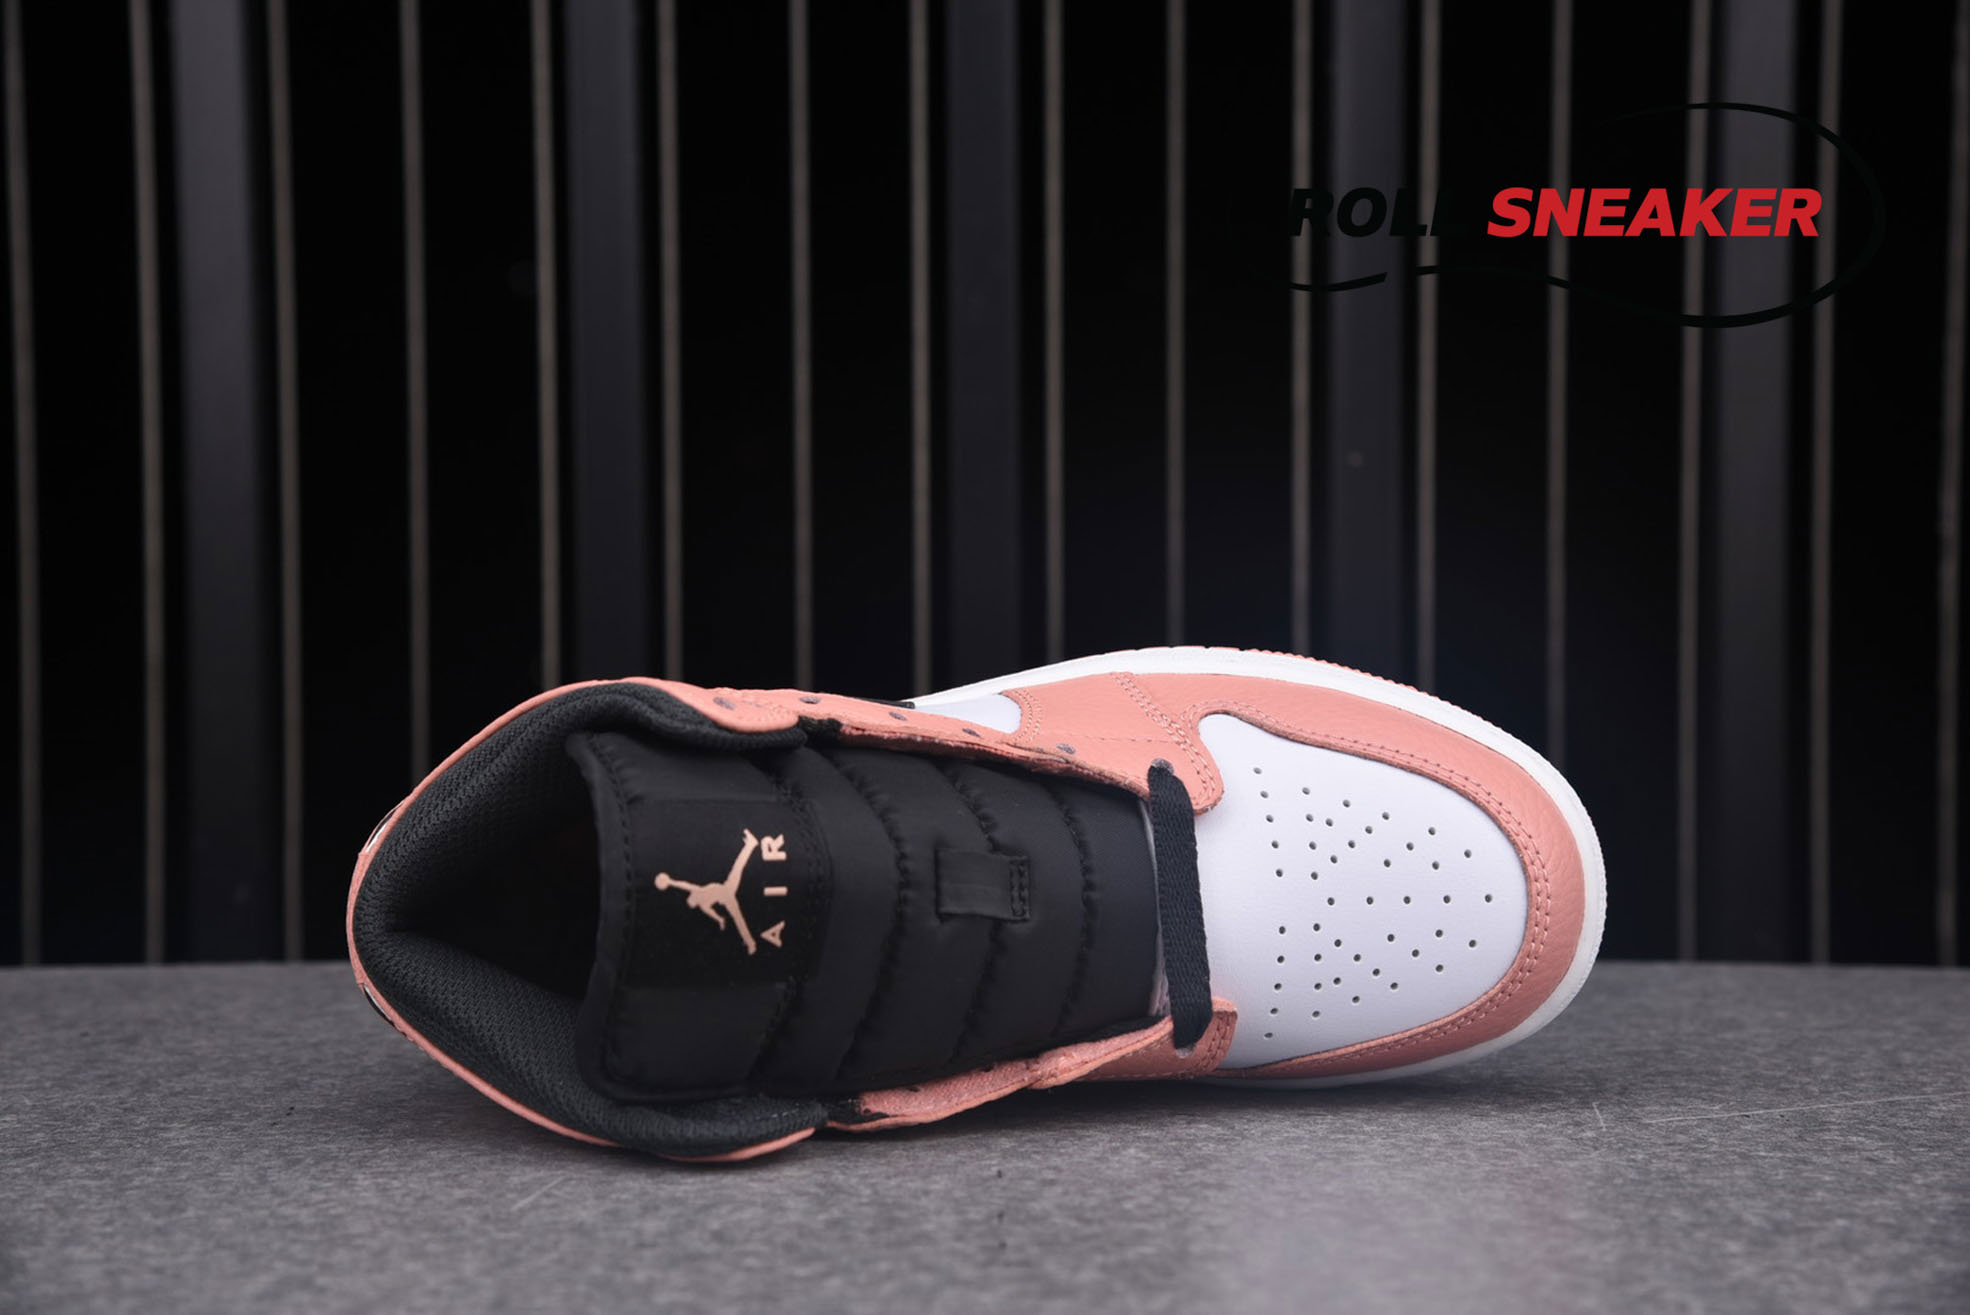 Nike Air jordan 1 mid pink quartz
